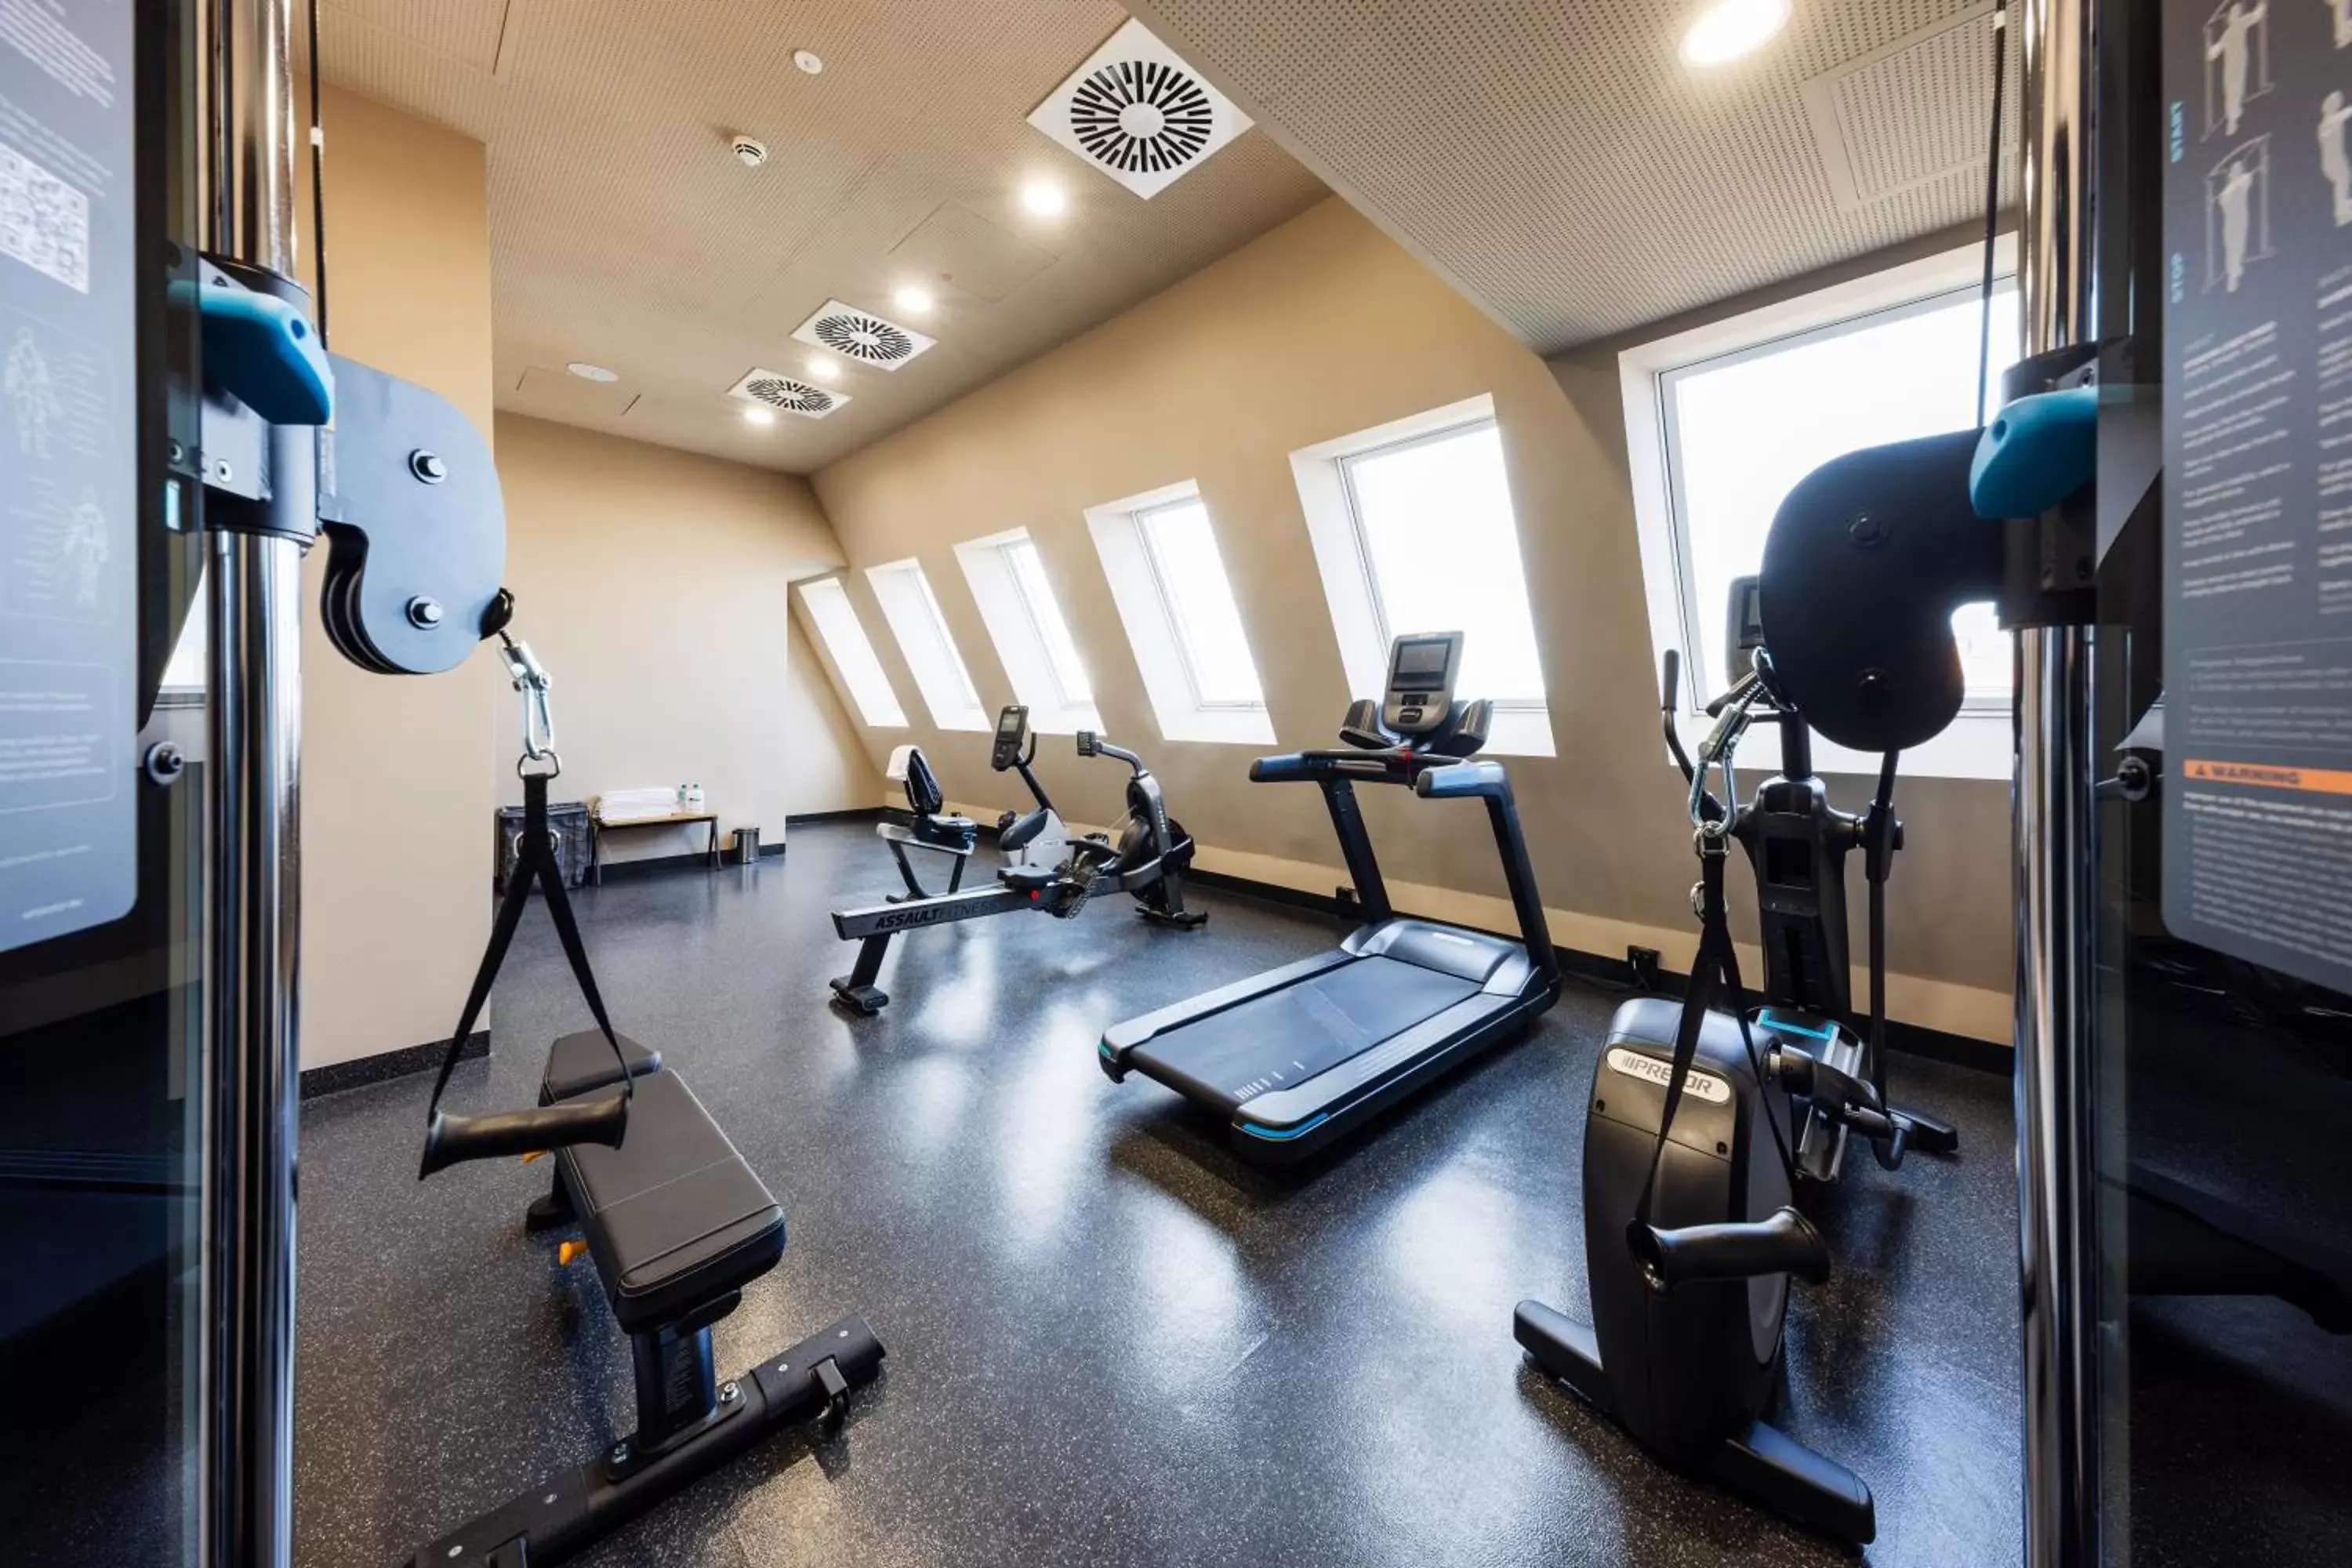 Fitness centre/facilities, Fitness Center/Facilities in Novotel Münster City